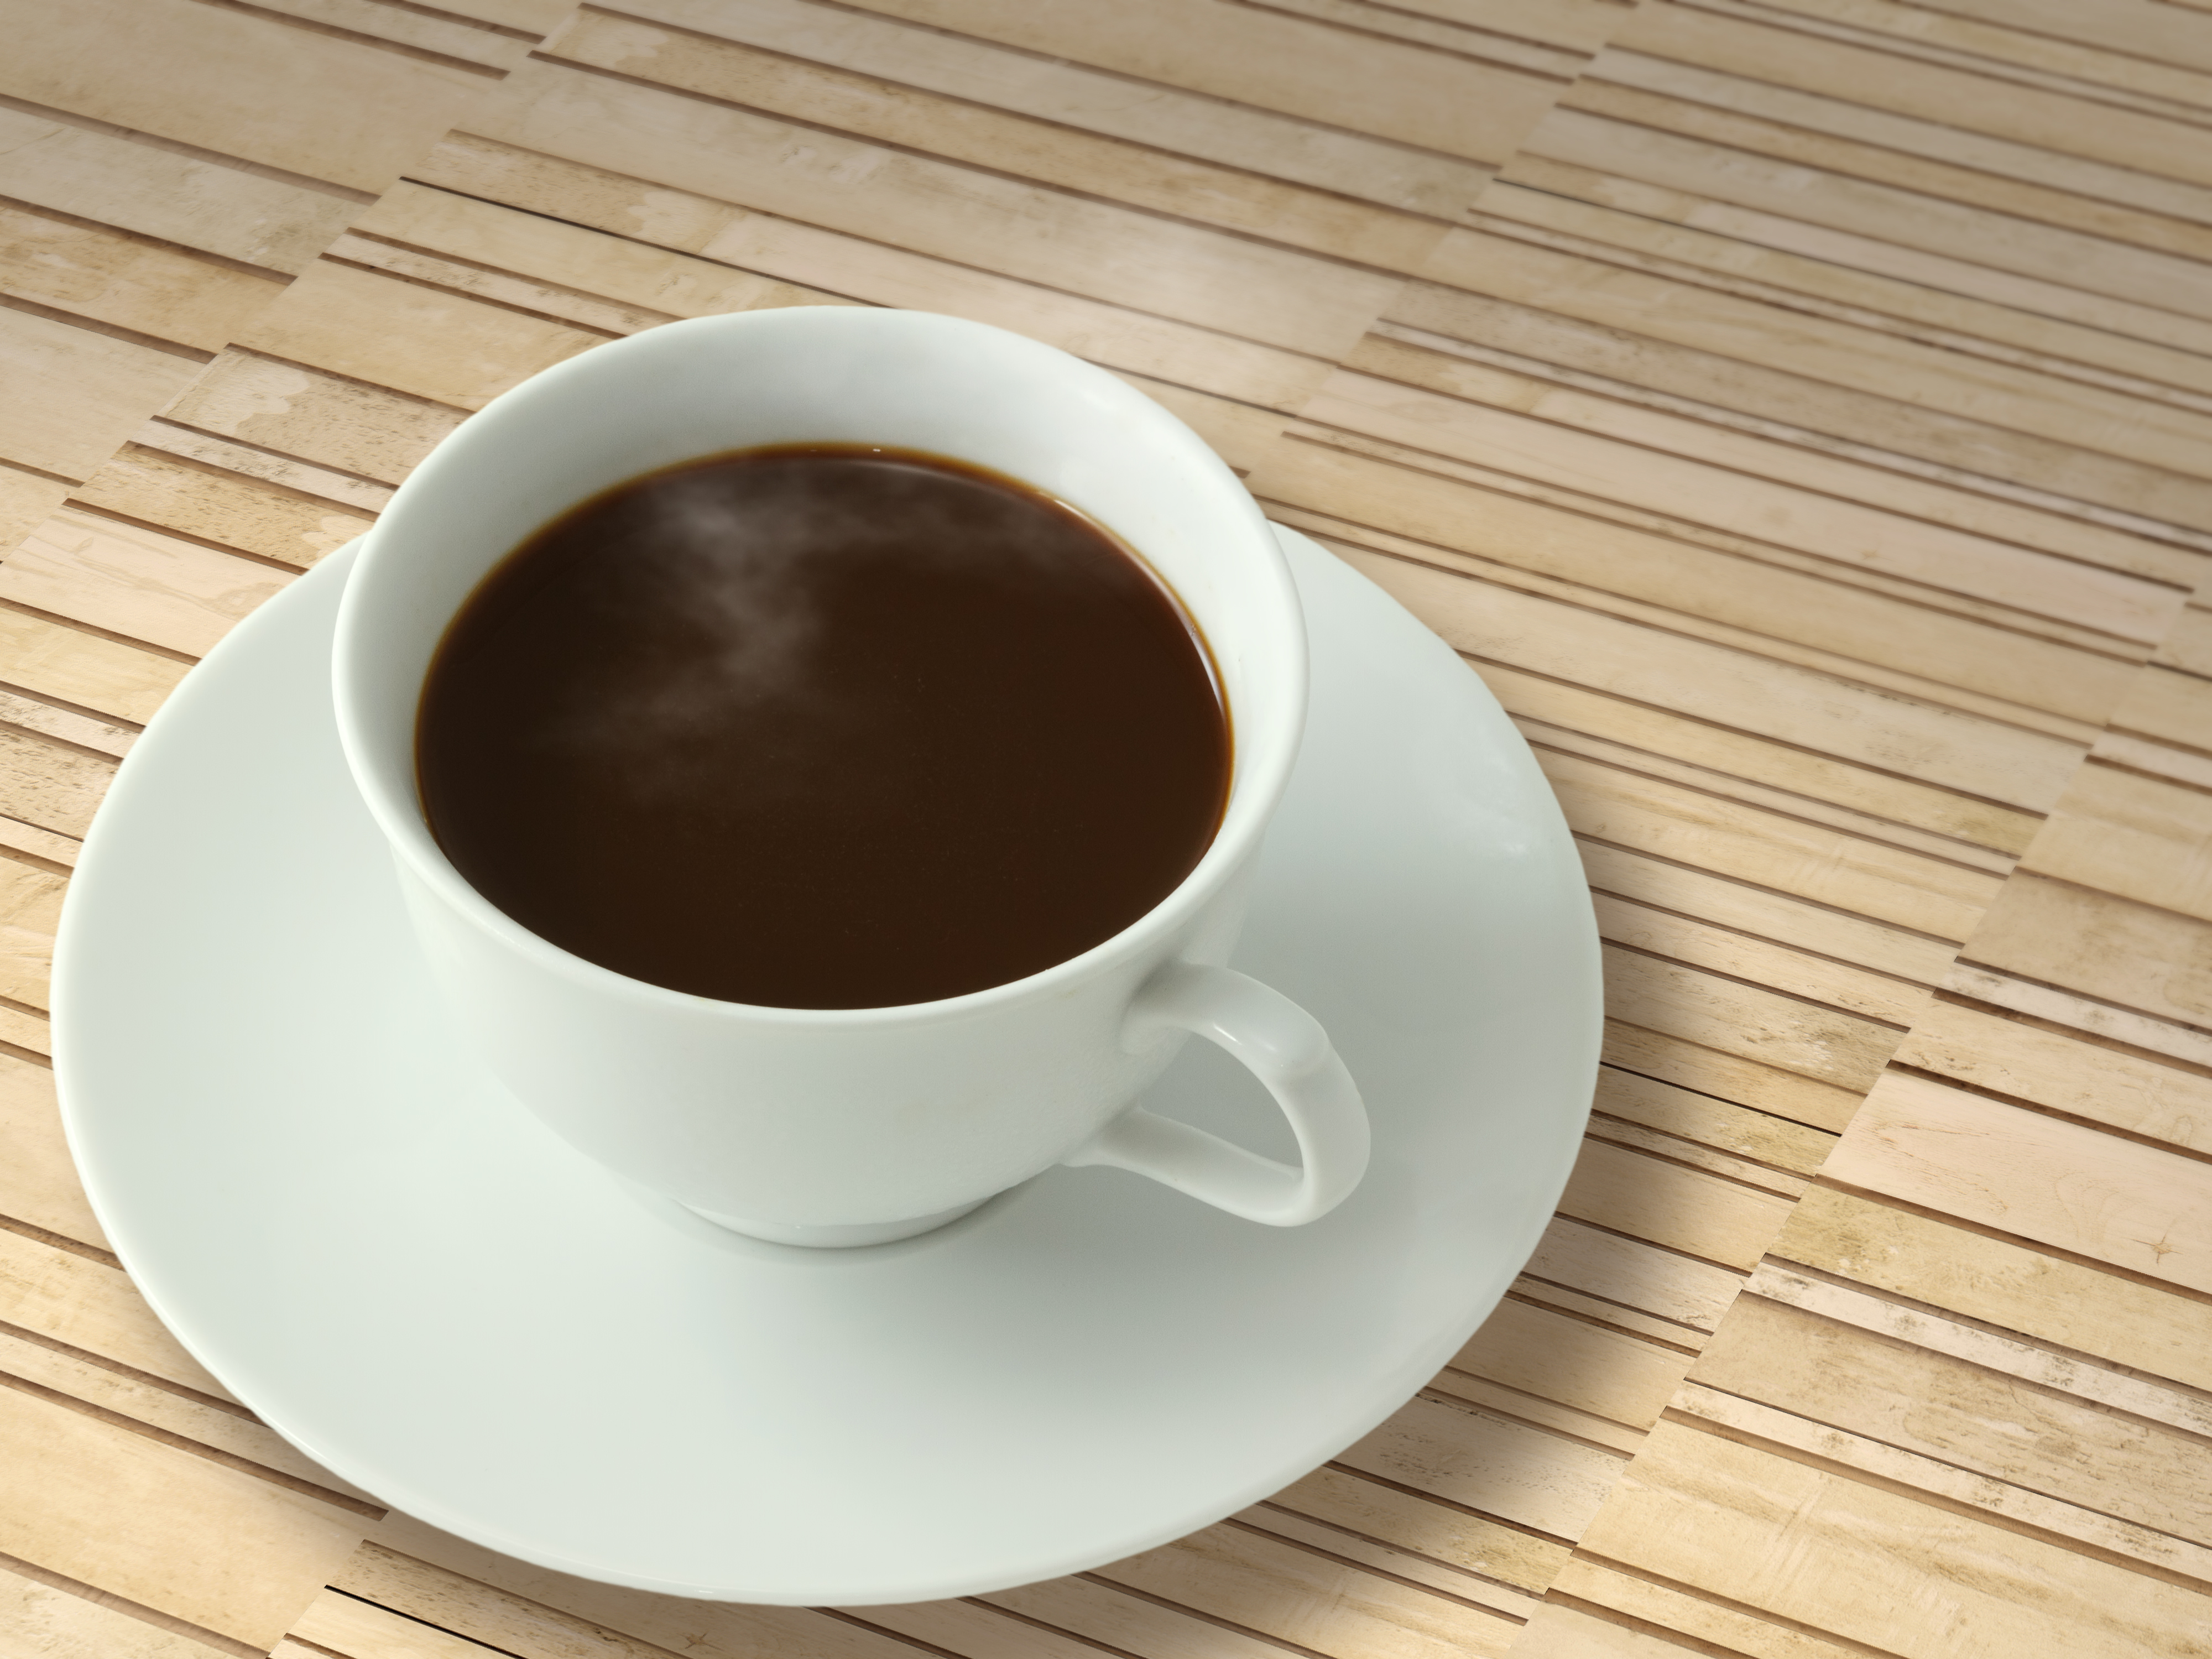 фото кофе в чашке на столе дома